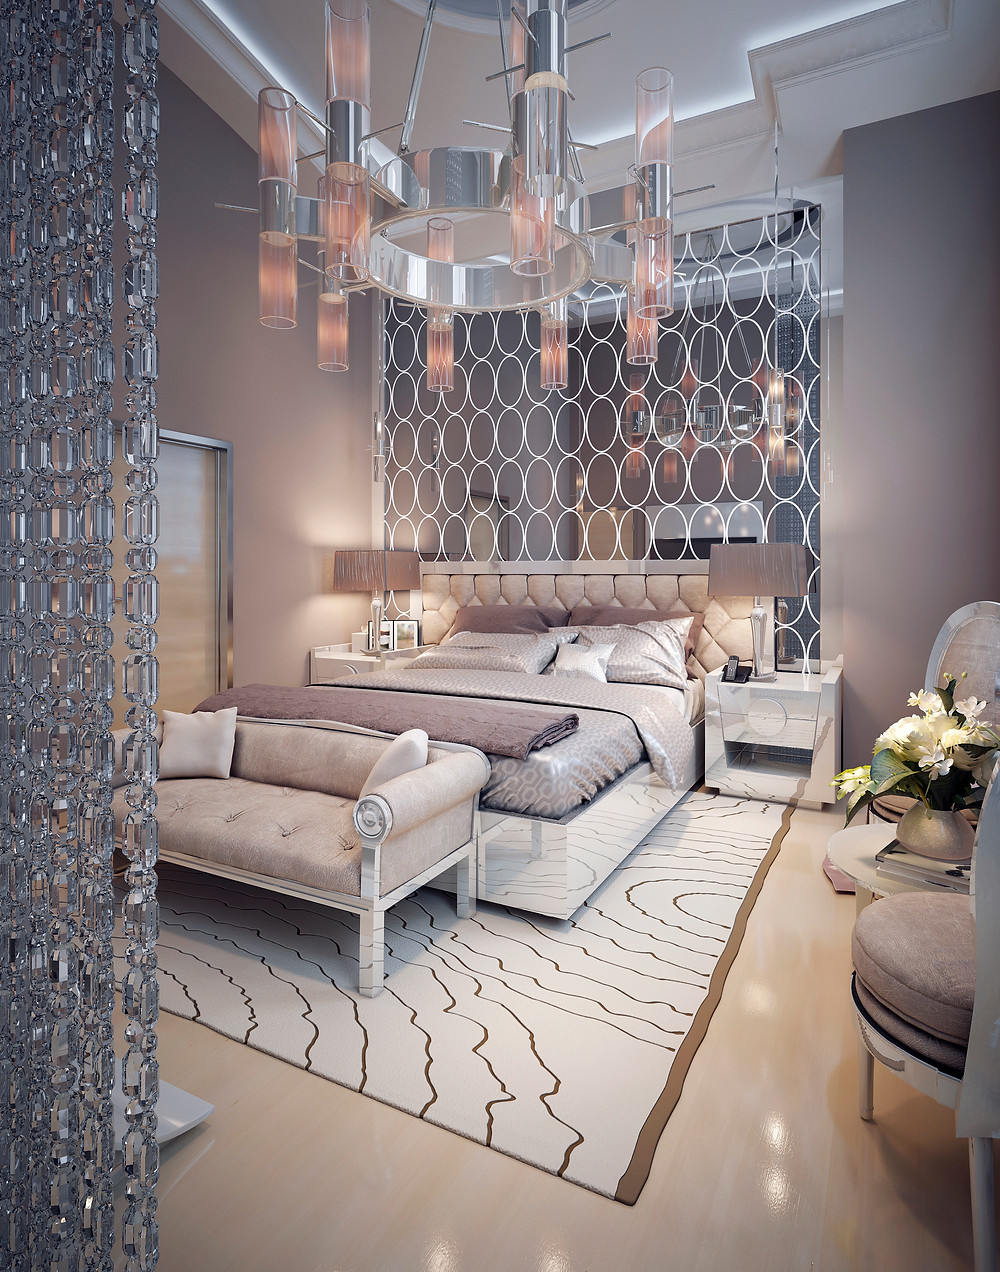 Silver Glam bedroom ideas